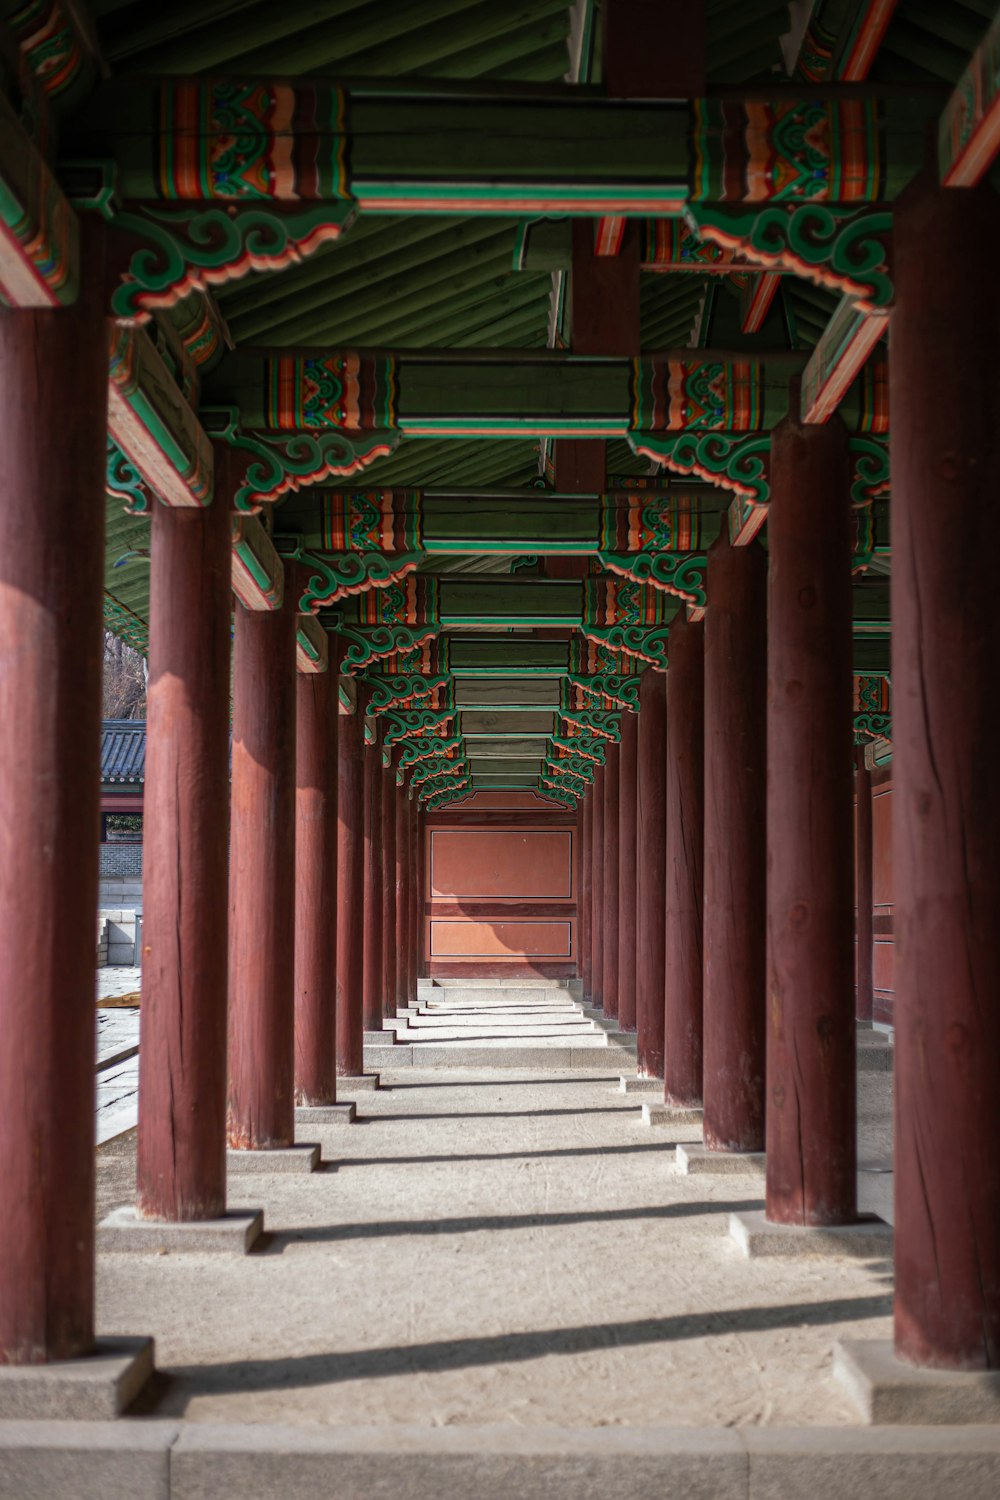 a corridor with many pillars